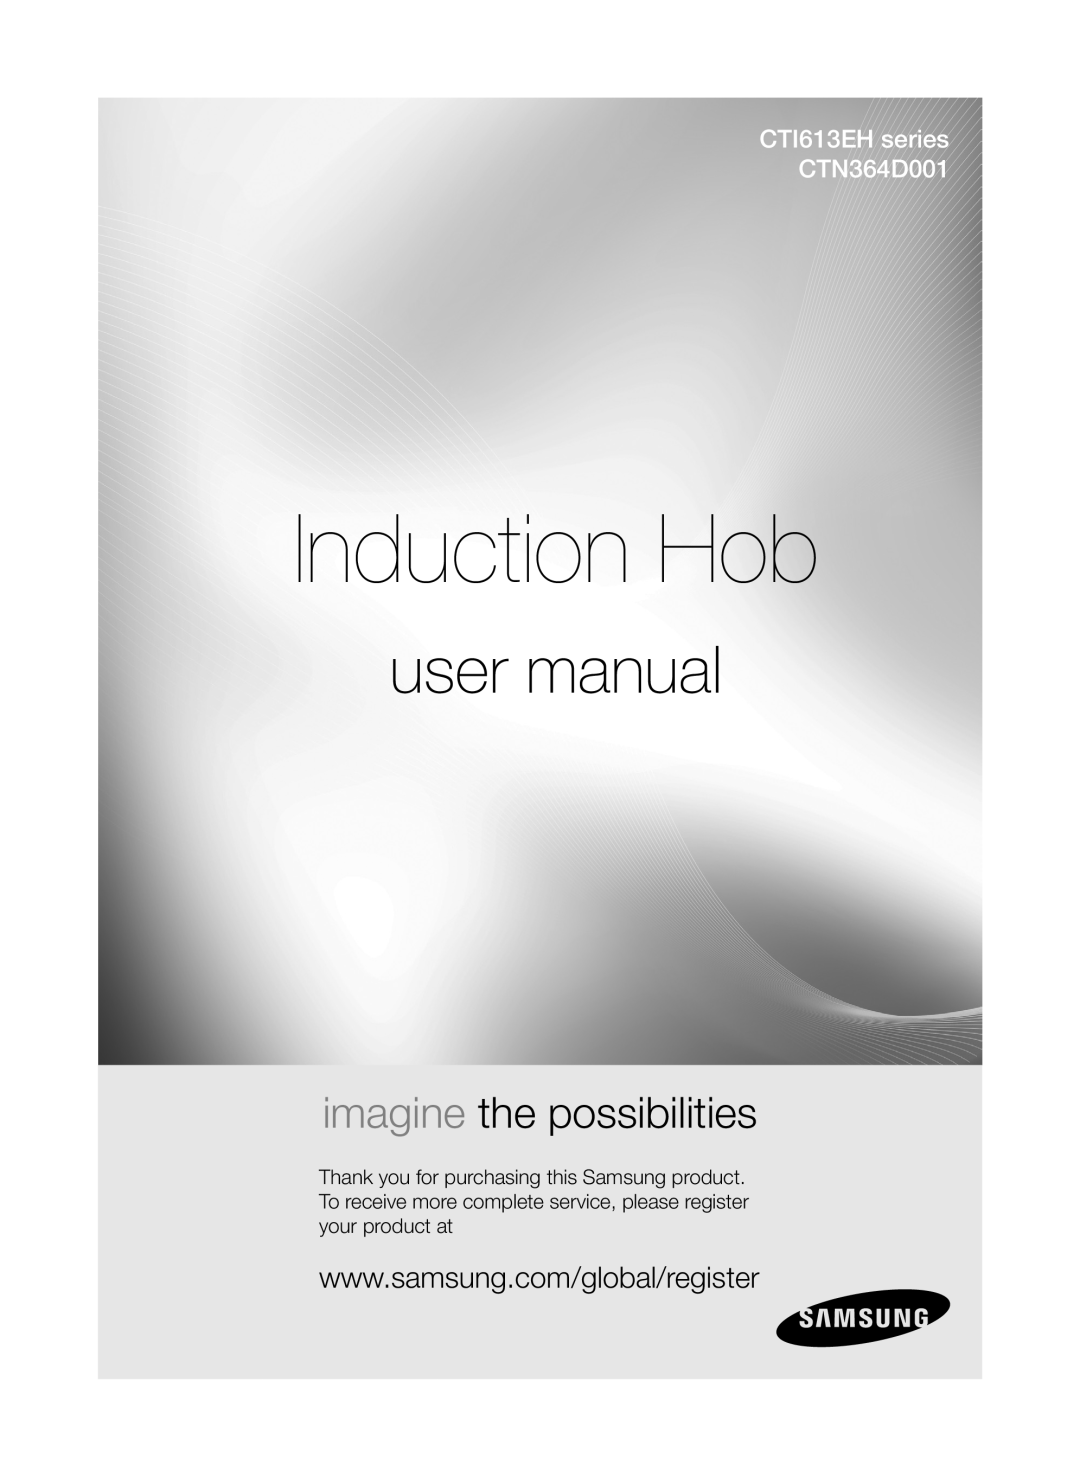 Samsung user manual Induction Hob, imagine the possibilities, CTI613EH series CTN364D001 